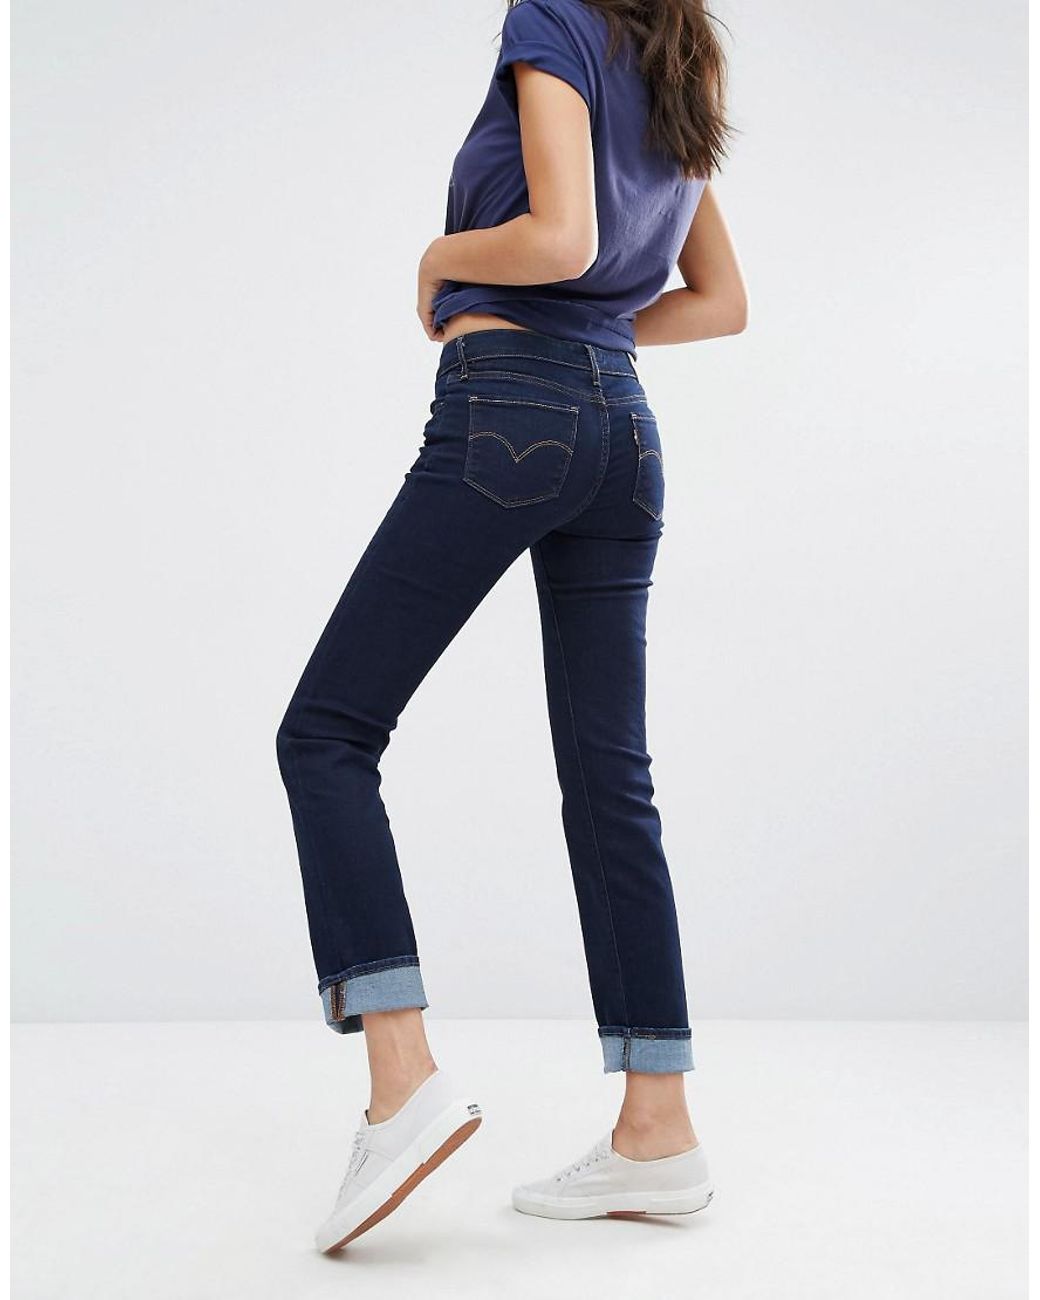 Women's Blue Levi's 714 Straight Mid Rise Jeans